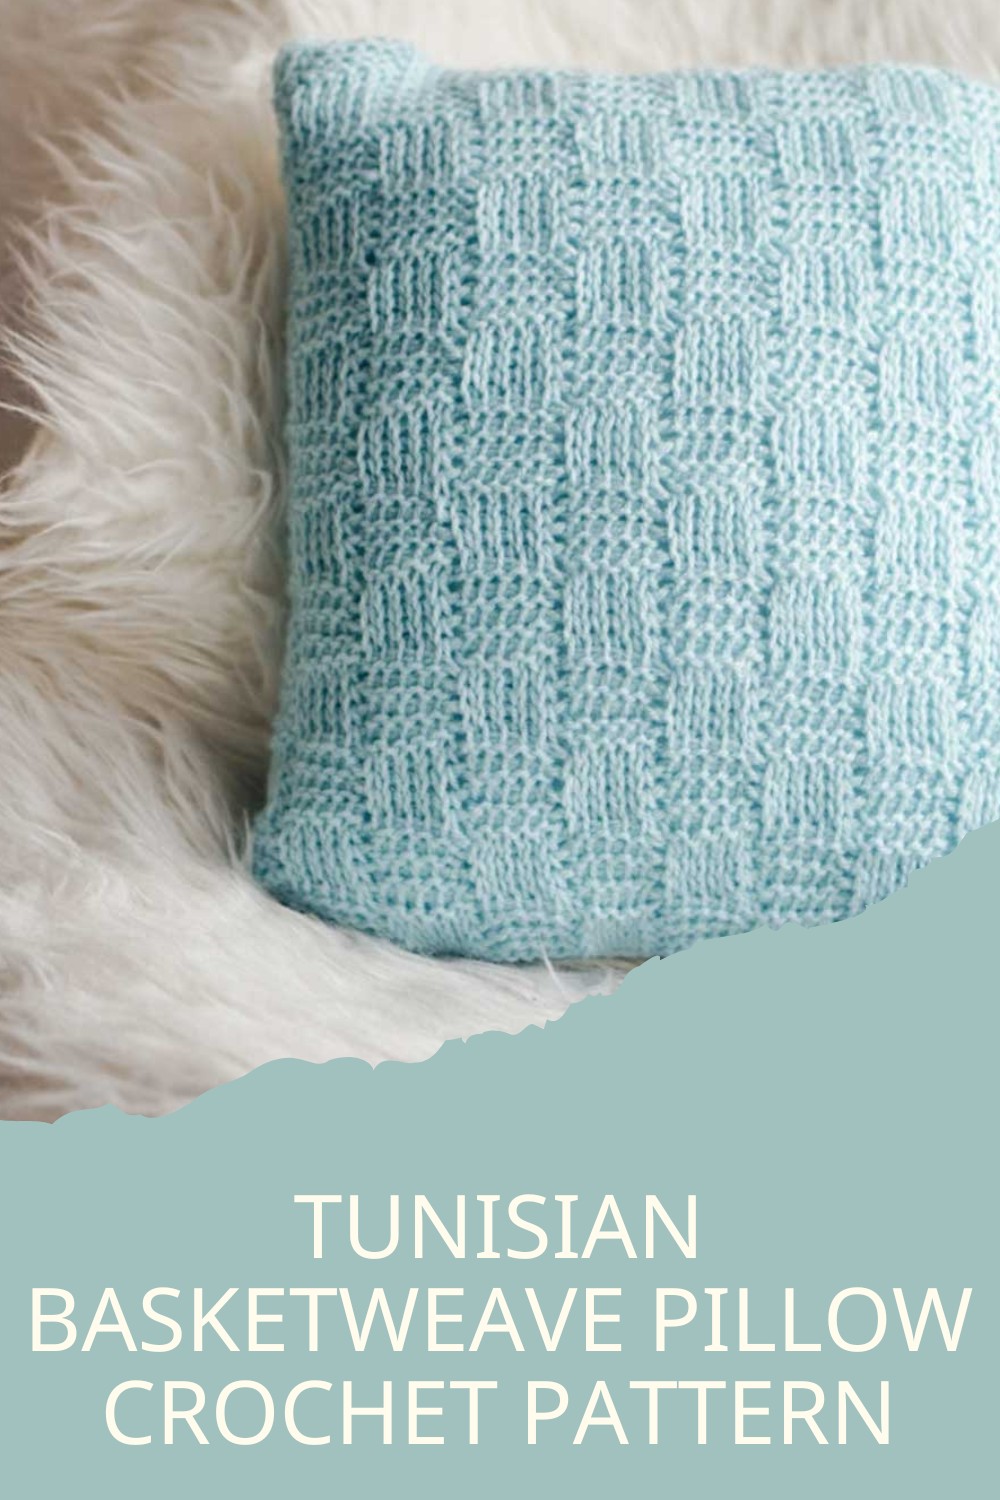 Tunisian Basketweave Pillow Crochet Pattern